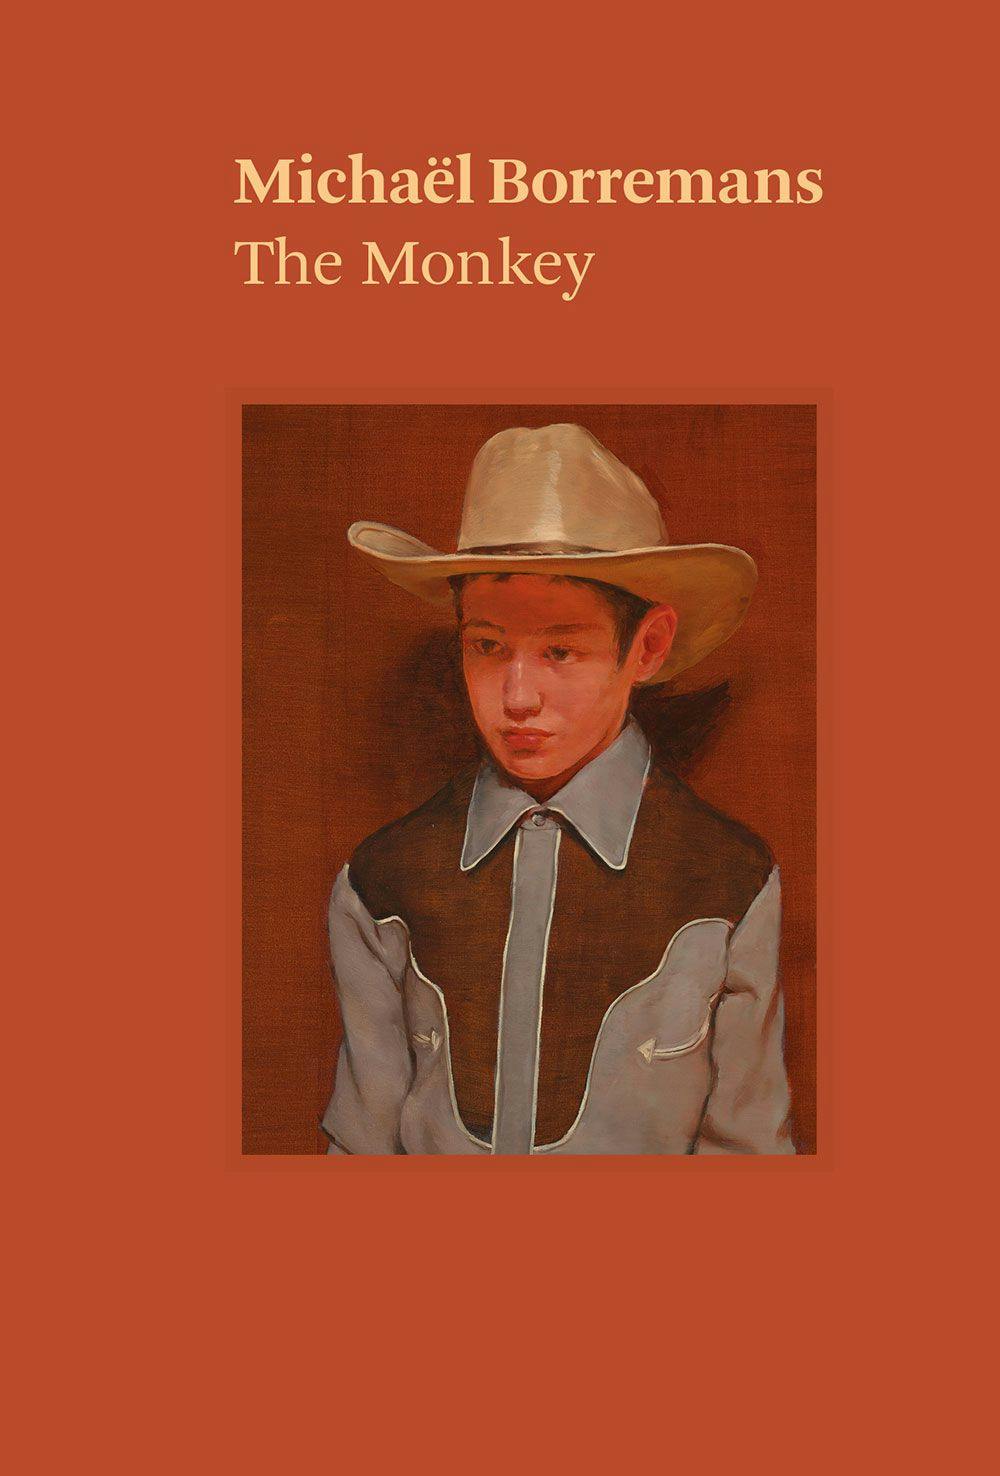 Michael Borremans: The Monkey